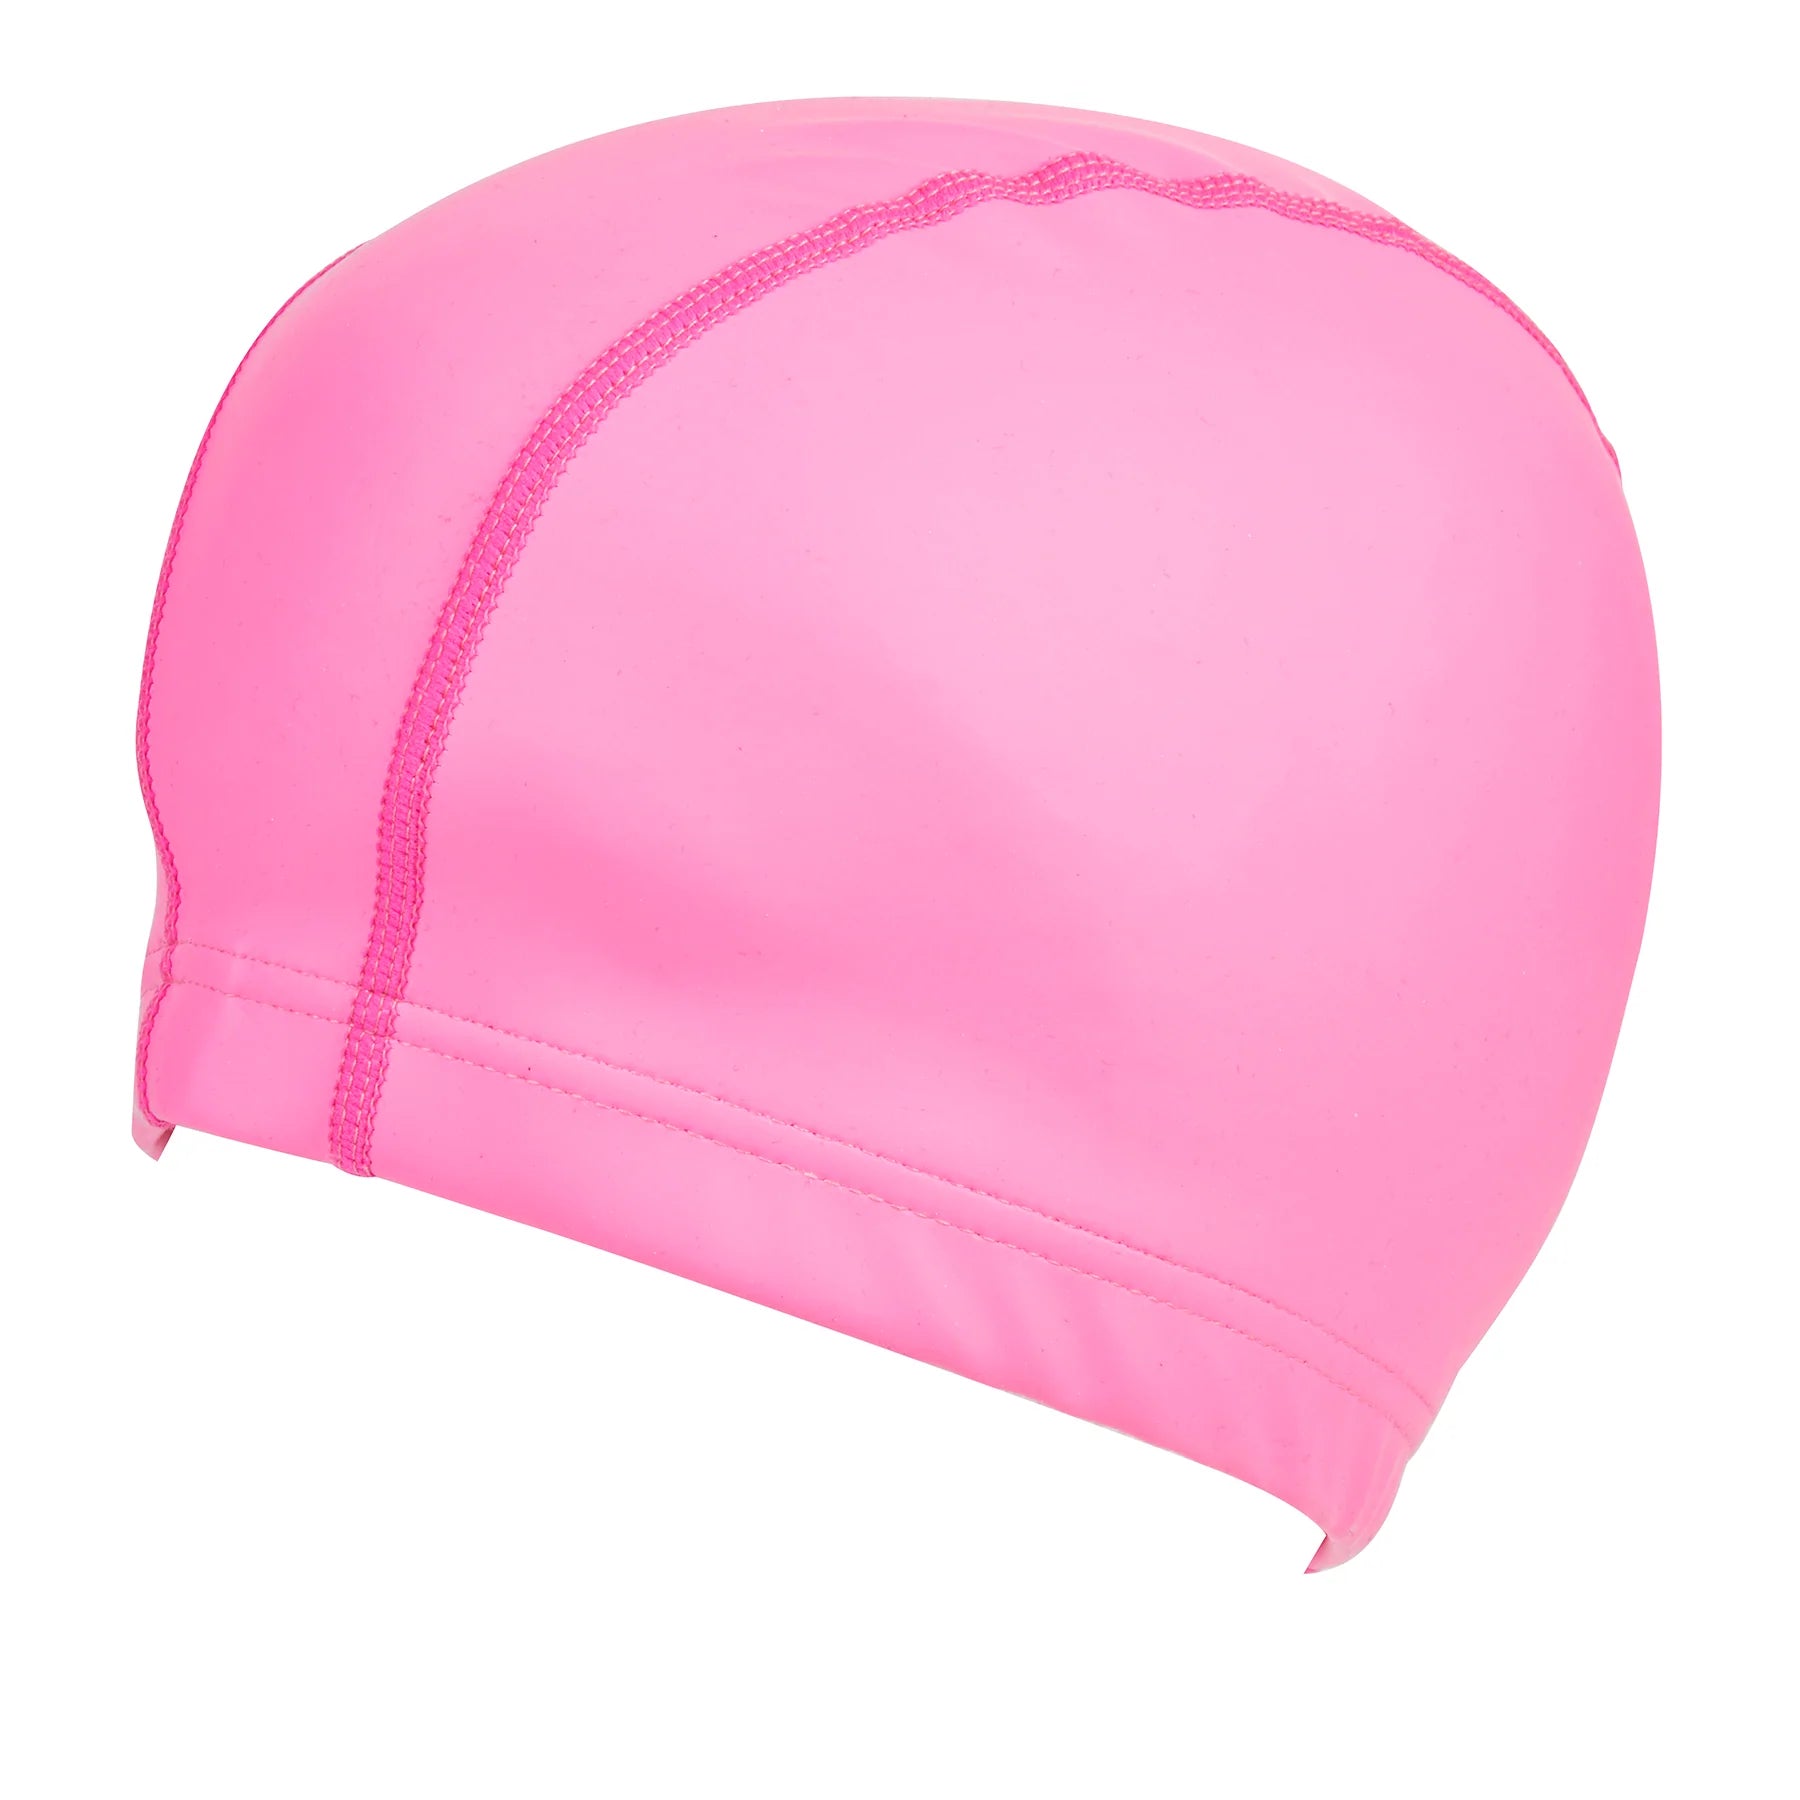 Bling2O | Neon Pink Heart Swim Cap